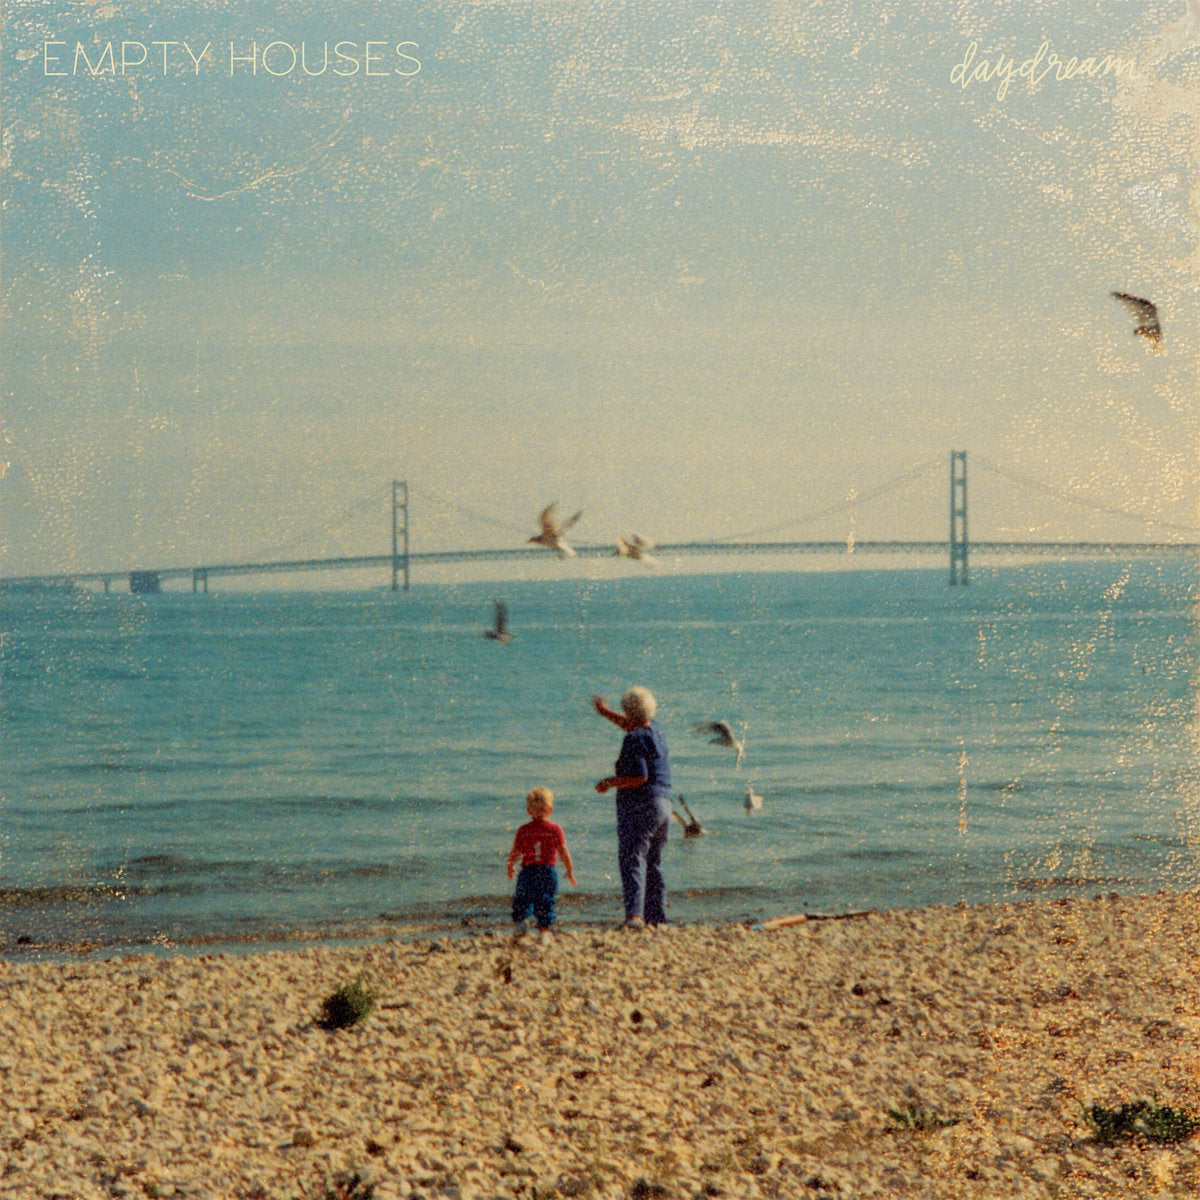 EMPTY HOUSES "Daydream" LP